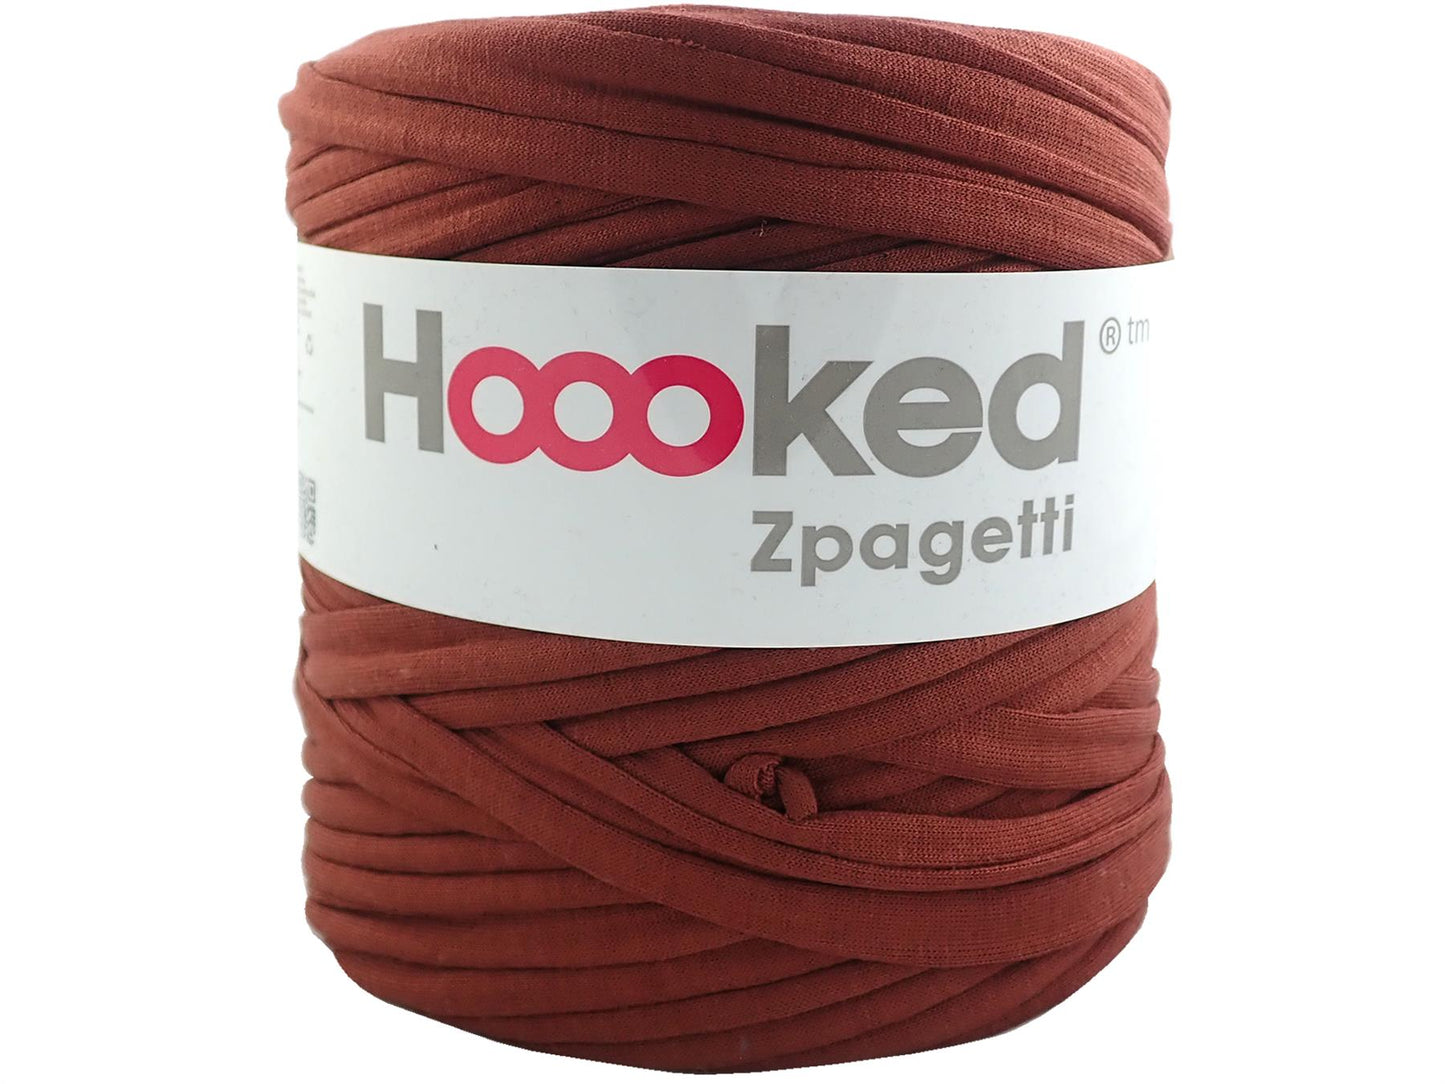 Hoooked Zpagetti Brown Cotton T-Shirt Yarn - 120M 700g